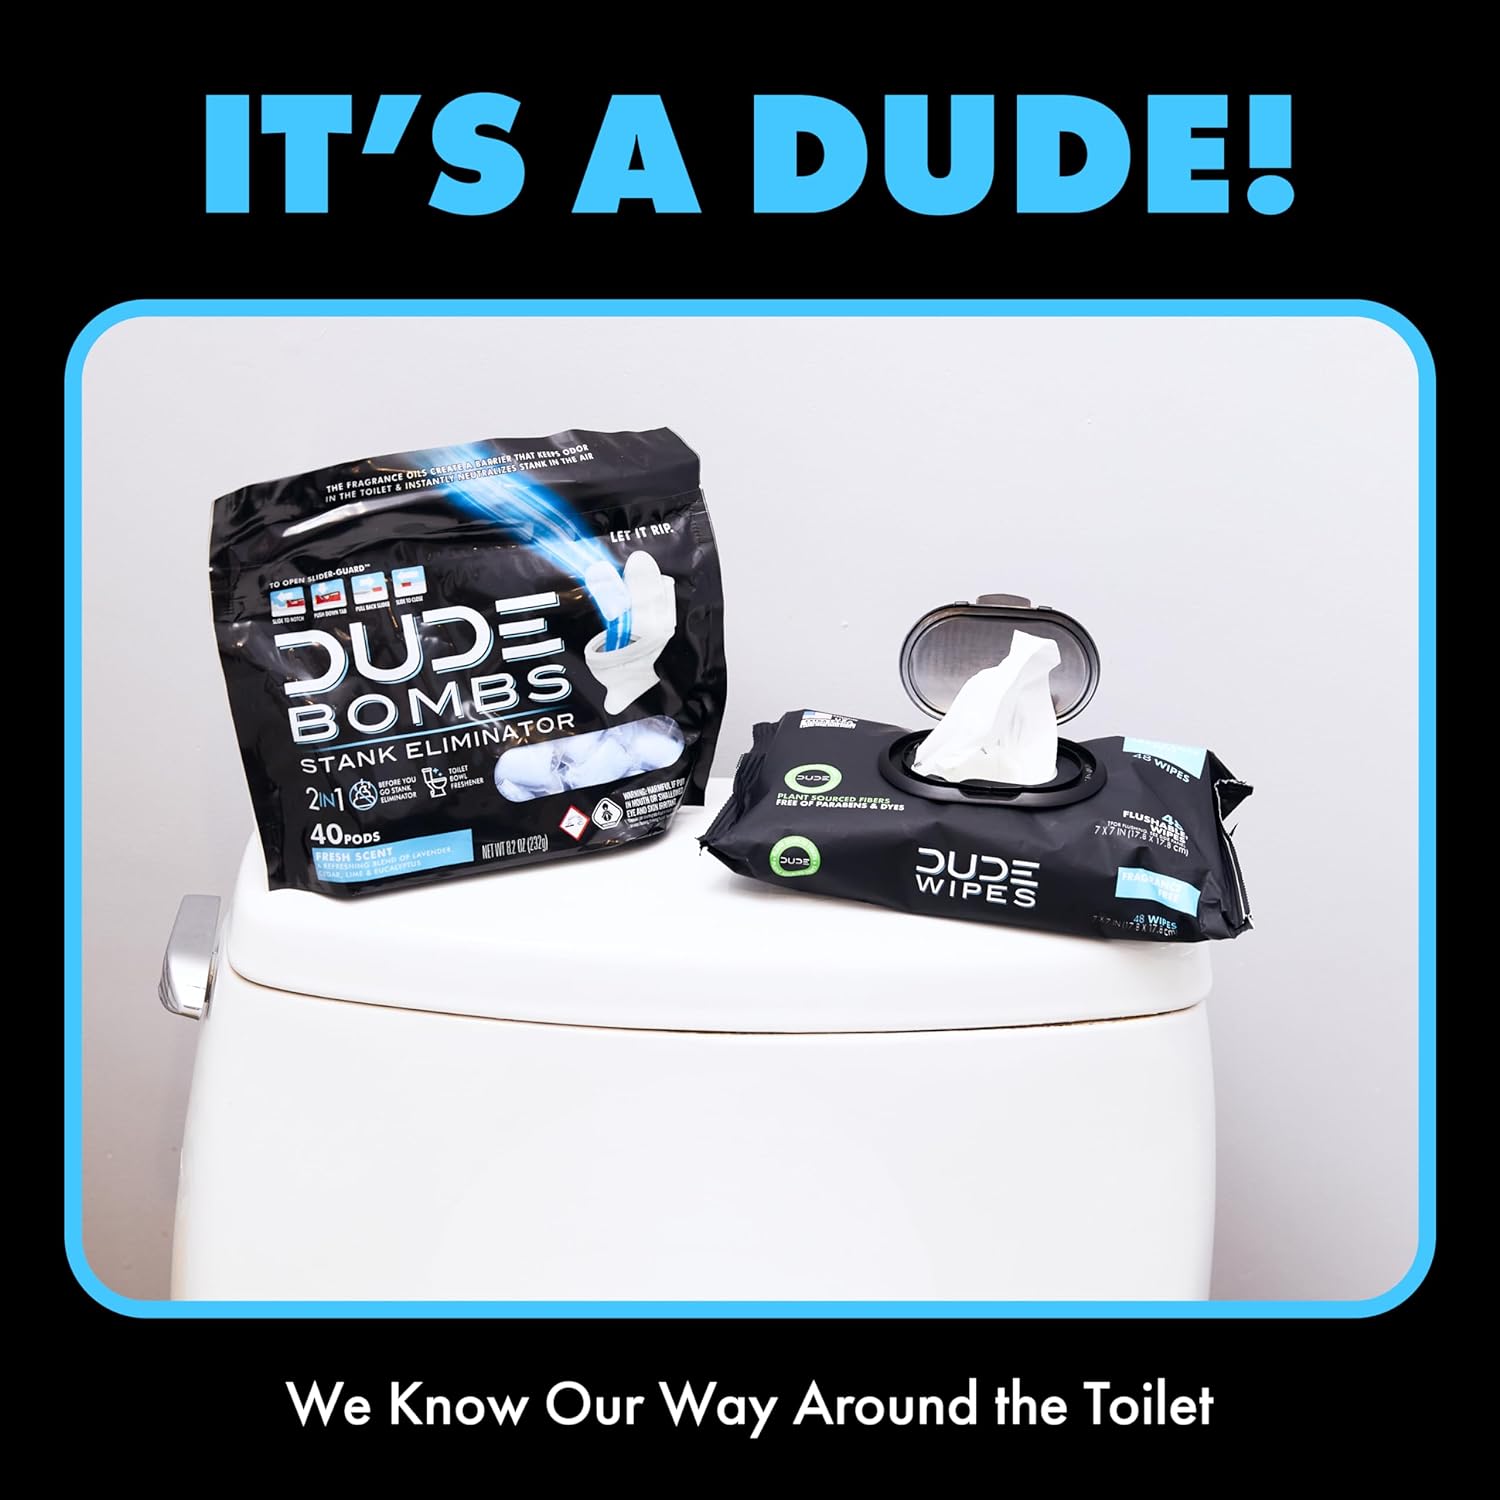 Dude Bombs - Toilet Stank Eliminator - 2 Pack, 40 Pods - Fresh Scent 2-in-1 Stank Eliminator + Toilet Bowl Freshener - Refreshing Blend of Lavender, Cedar, Lime, and Eucalyptus : Health & Household